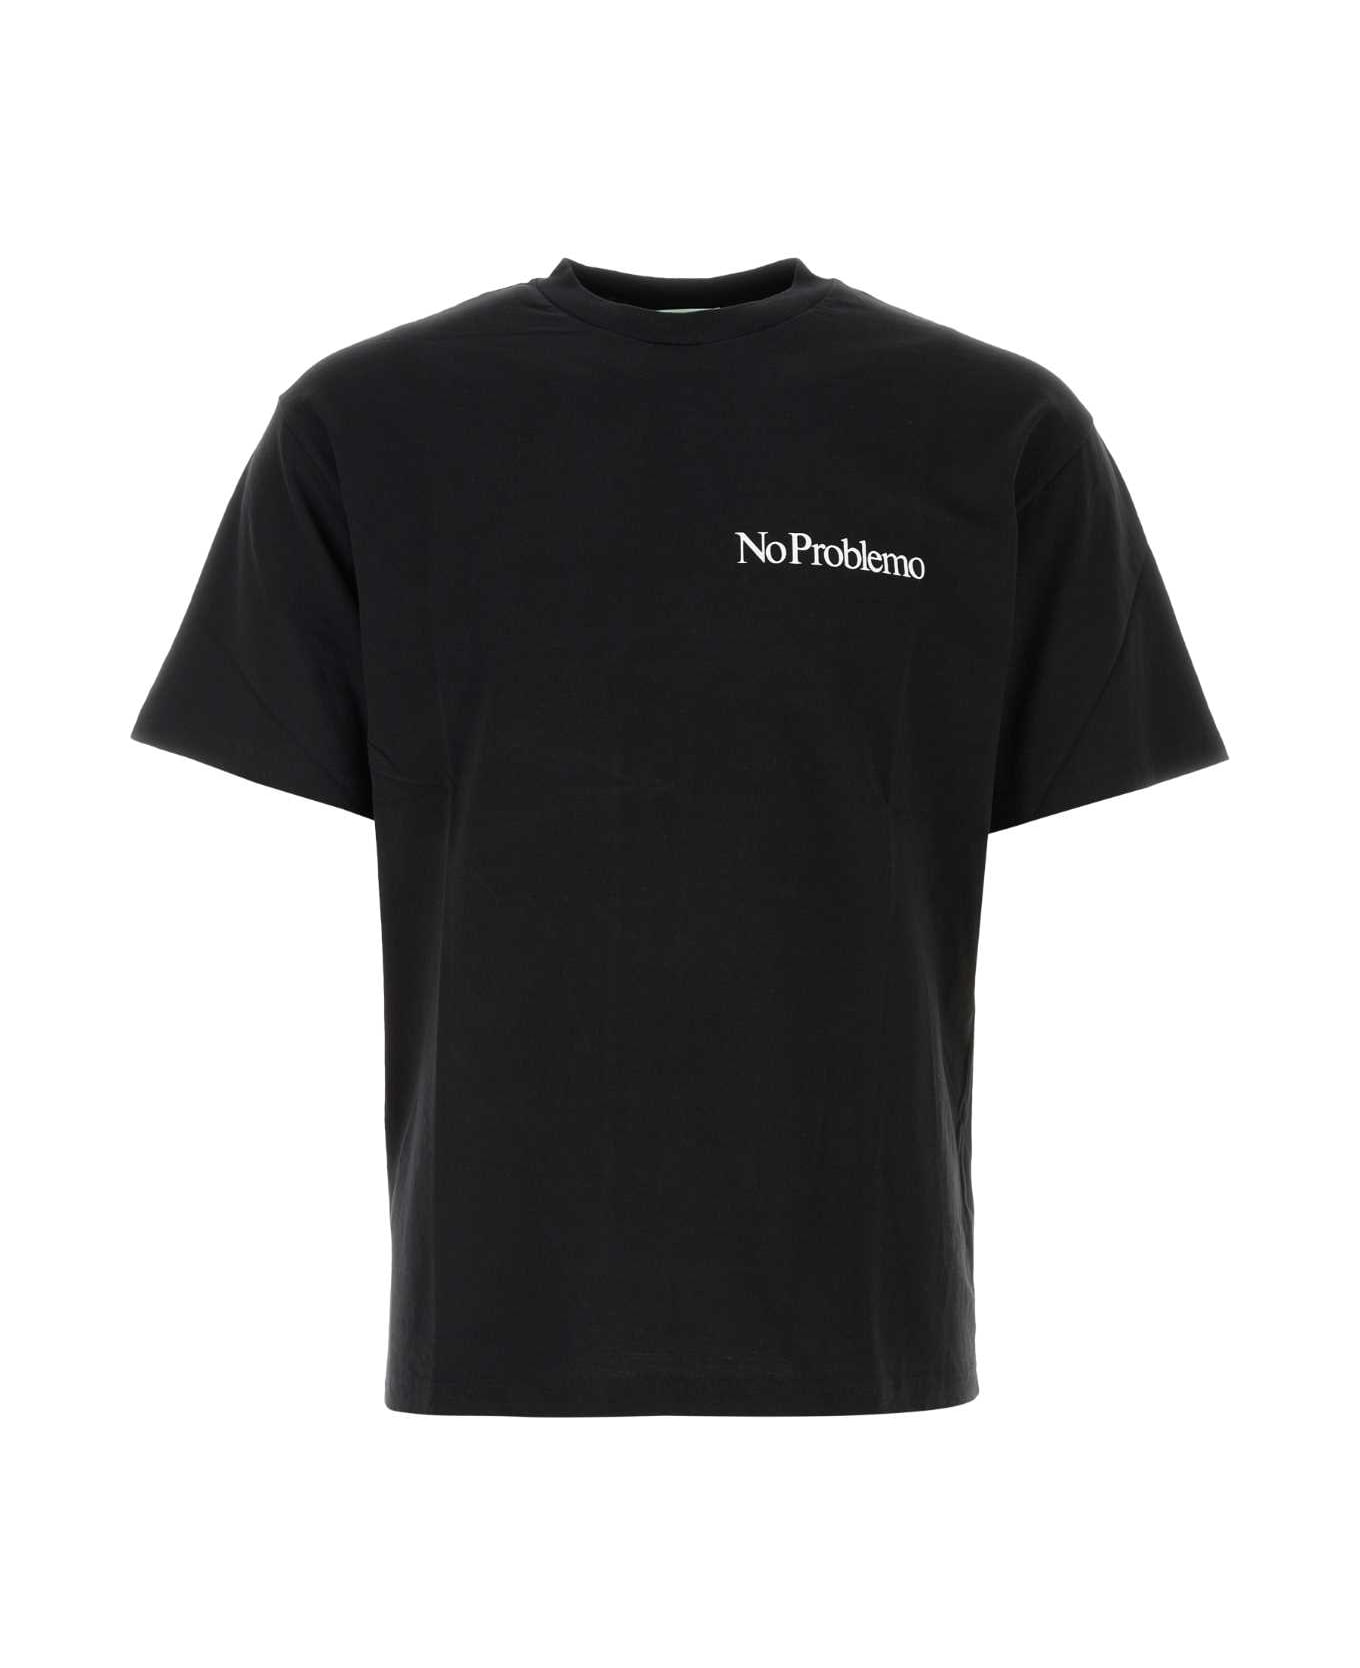 Aries Black Cotton T-shirt - BLACK シャツ